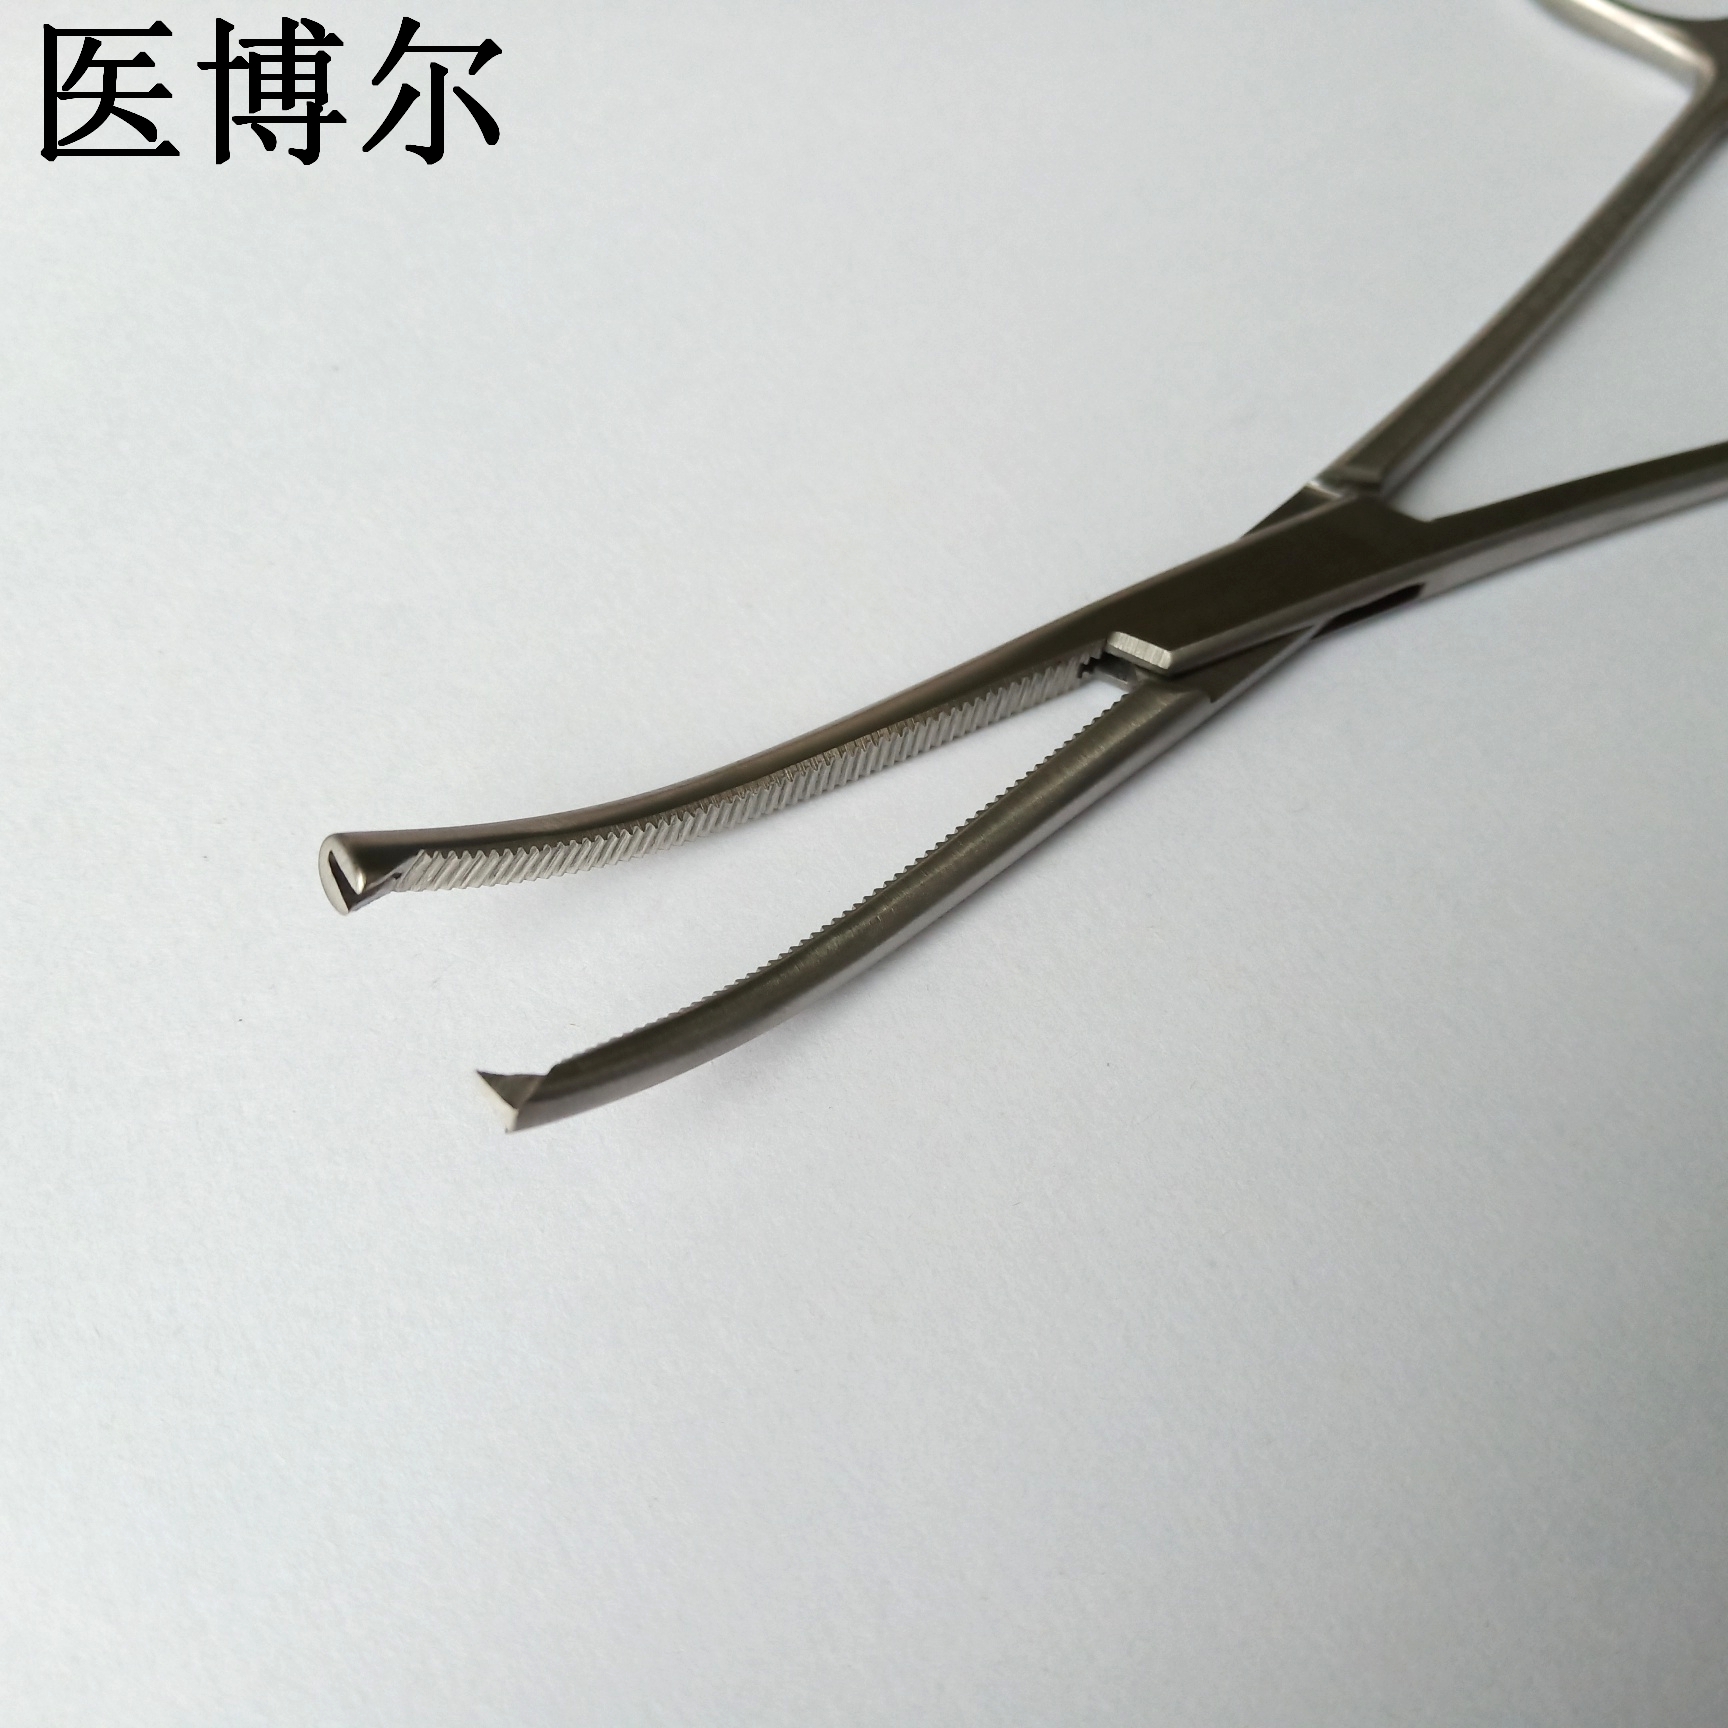 18cm弯克扣钳 (5)_看图王.jpg